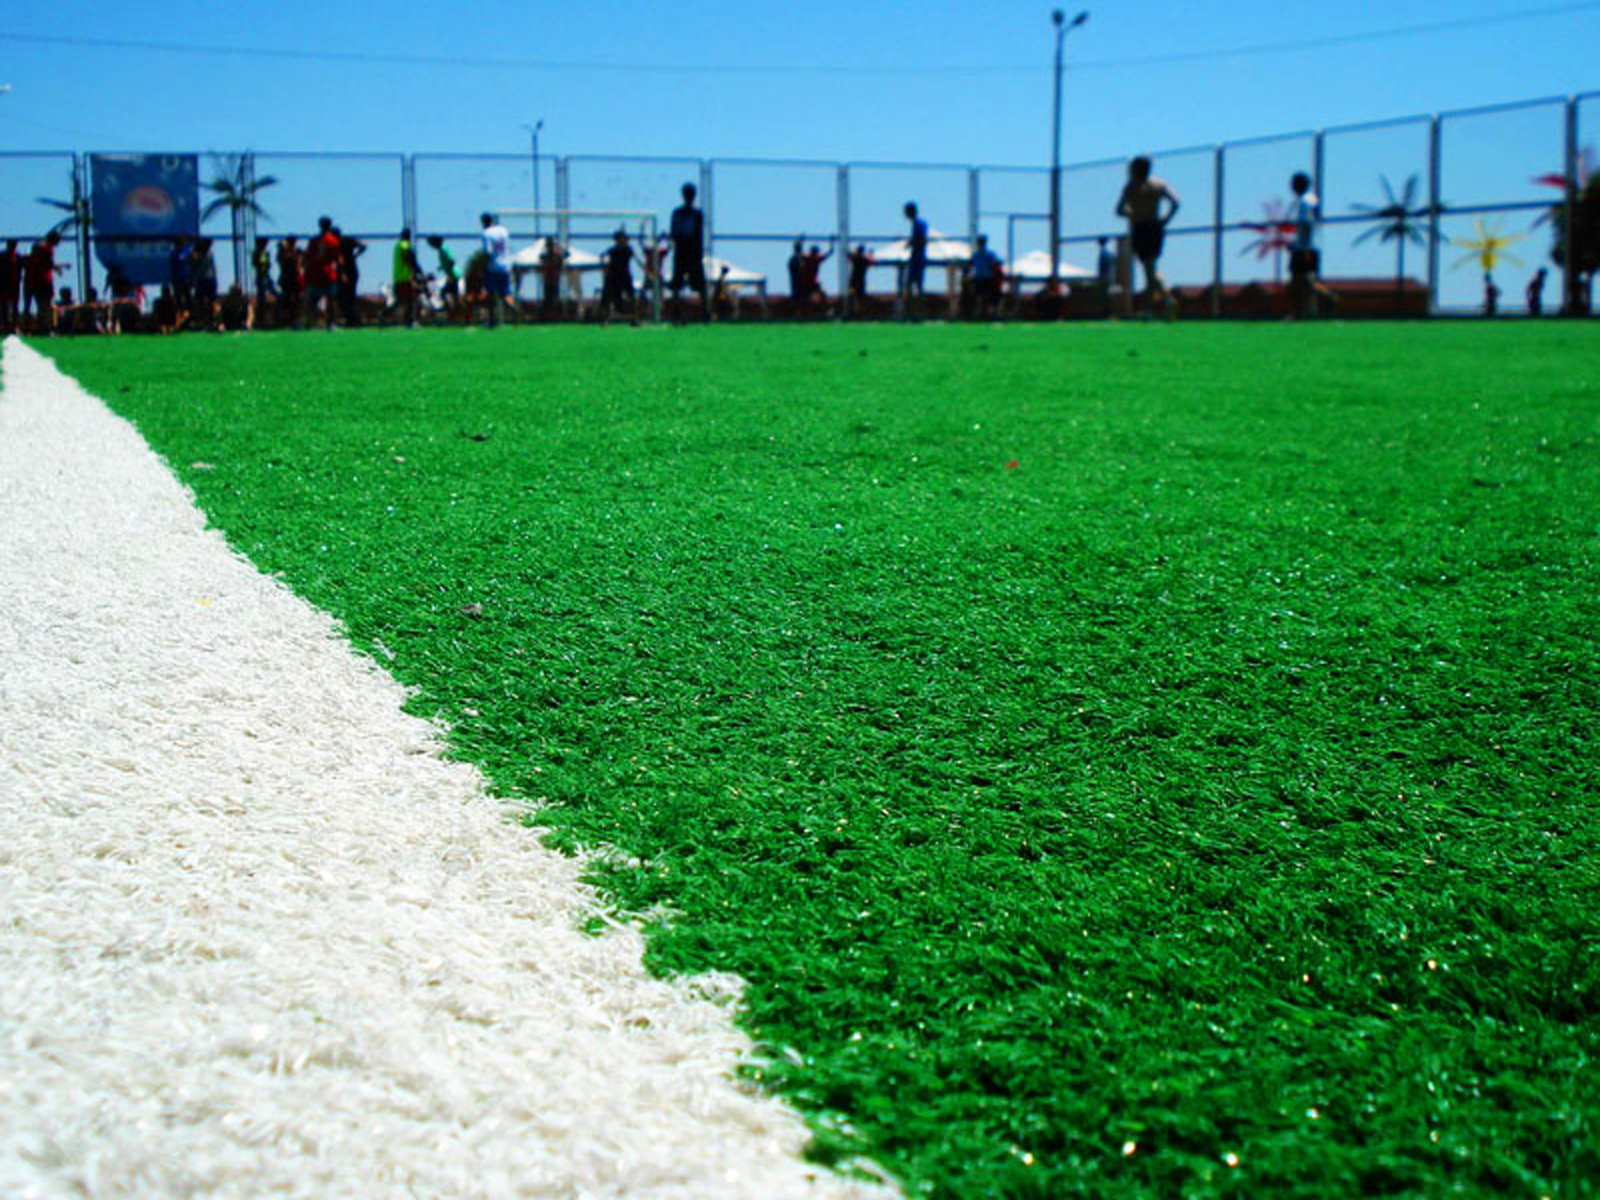 baseball live wallpapers,grass,green,lawn,artificial turf,flooring